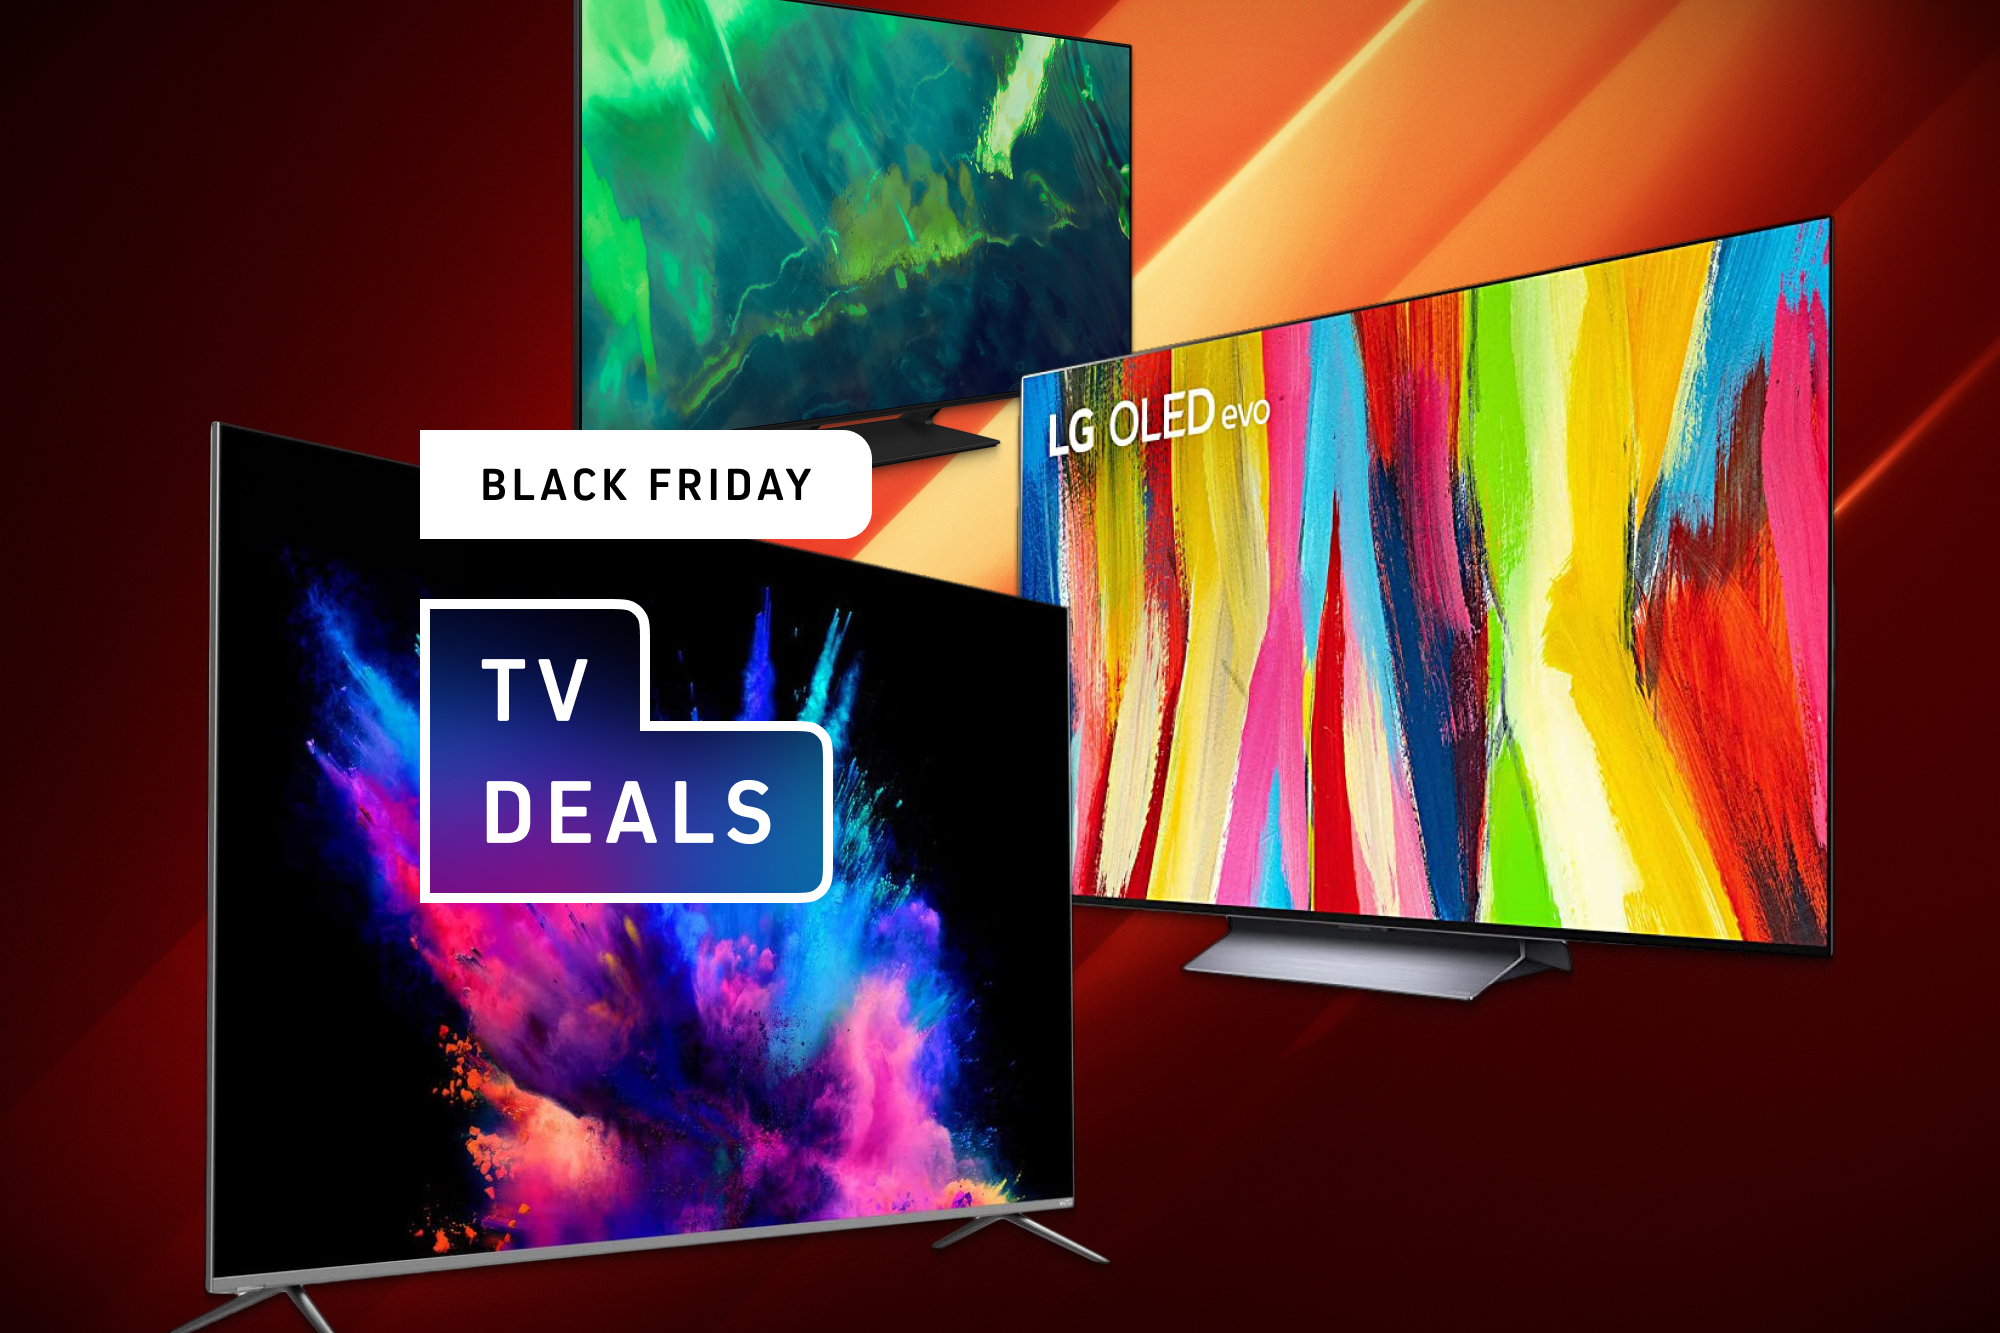 Best Black Friday TV Deals: Save on LG, Samsung ,
Sony